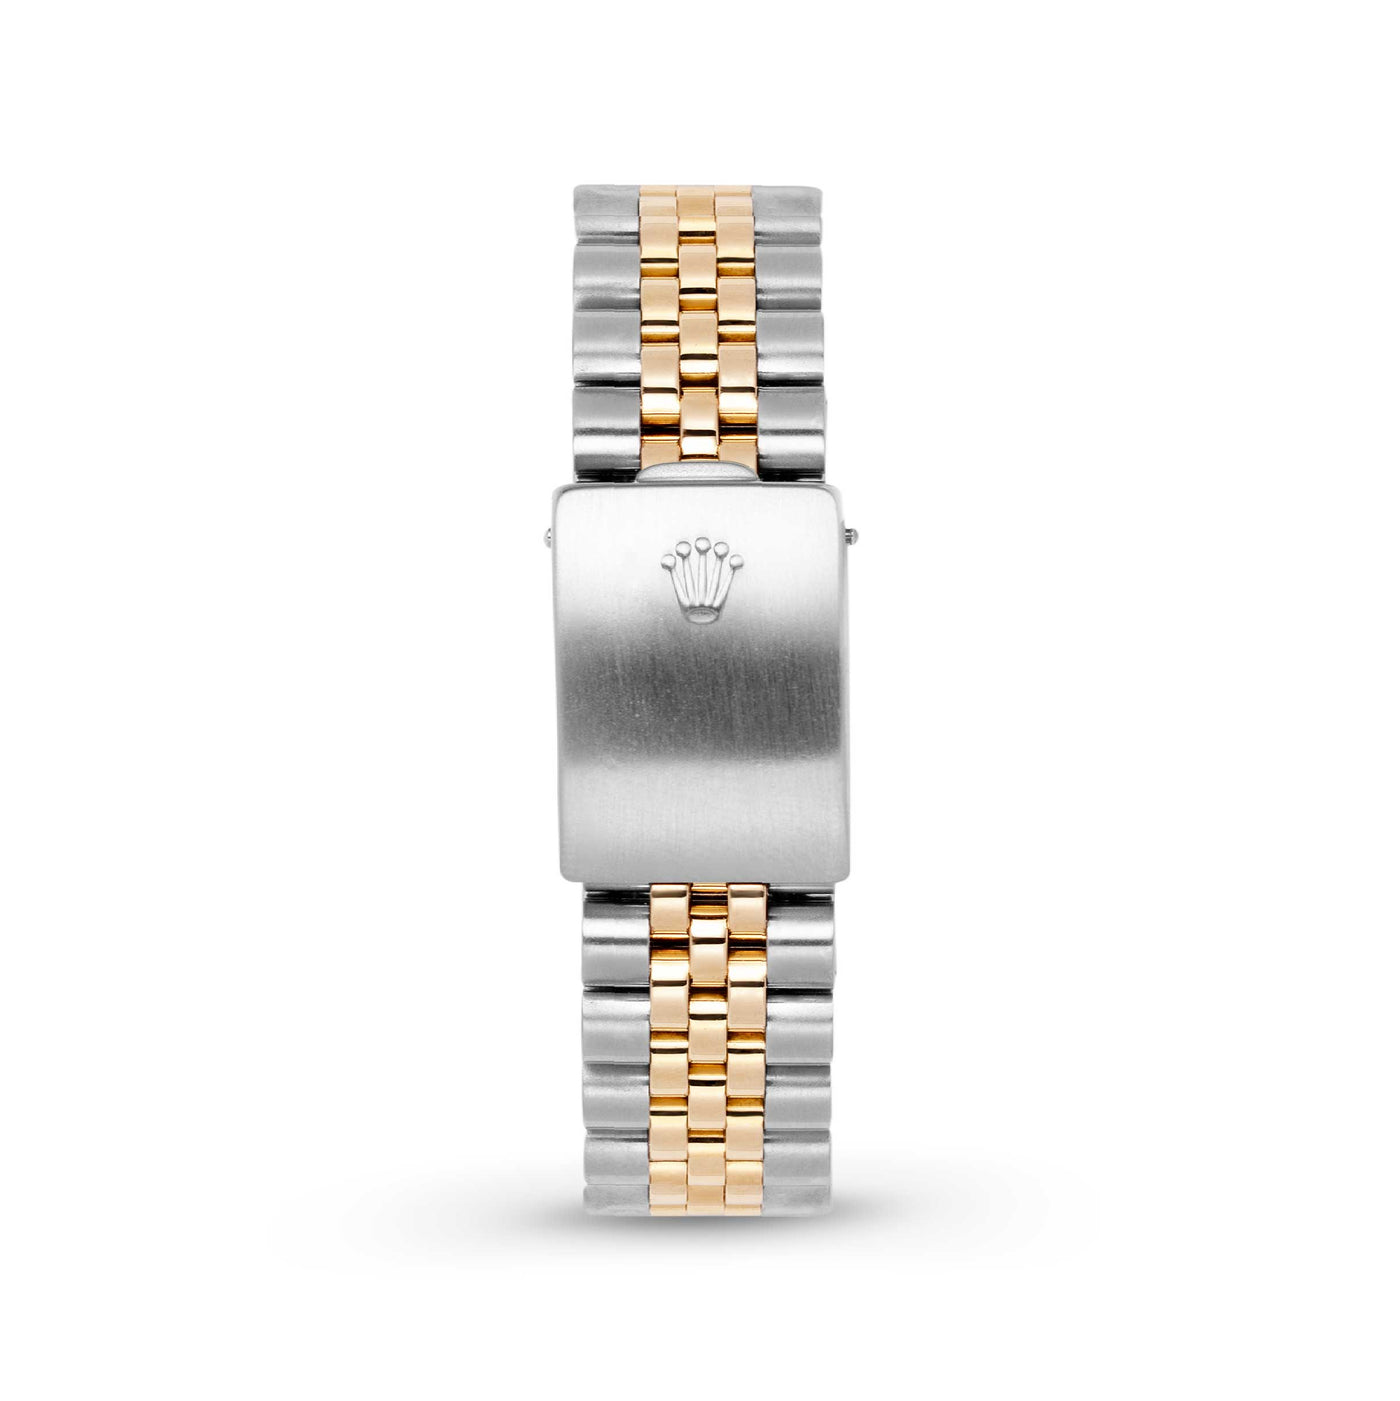 Rolex Datejust Diamond Bezel Watch 36mm Black Roman Dial | 3.65ct